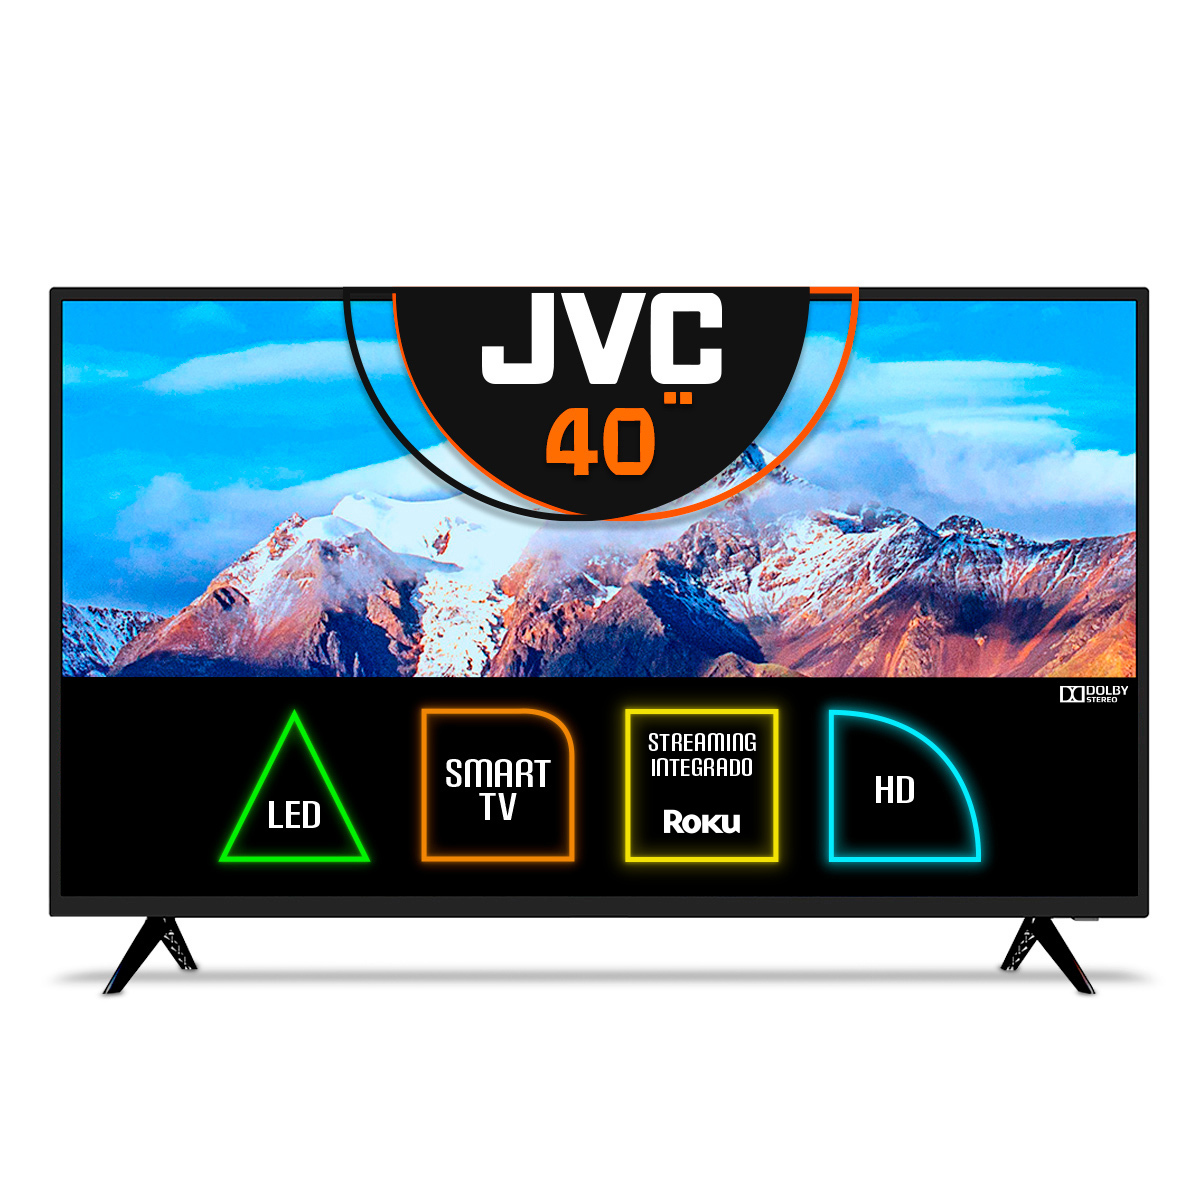 Pantalla JVC Smart Roku TV SI40FR 40 pulg. Led HD, ¡Outlet!, Todas, Categoría